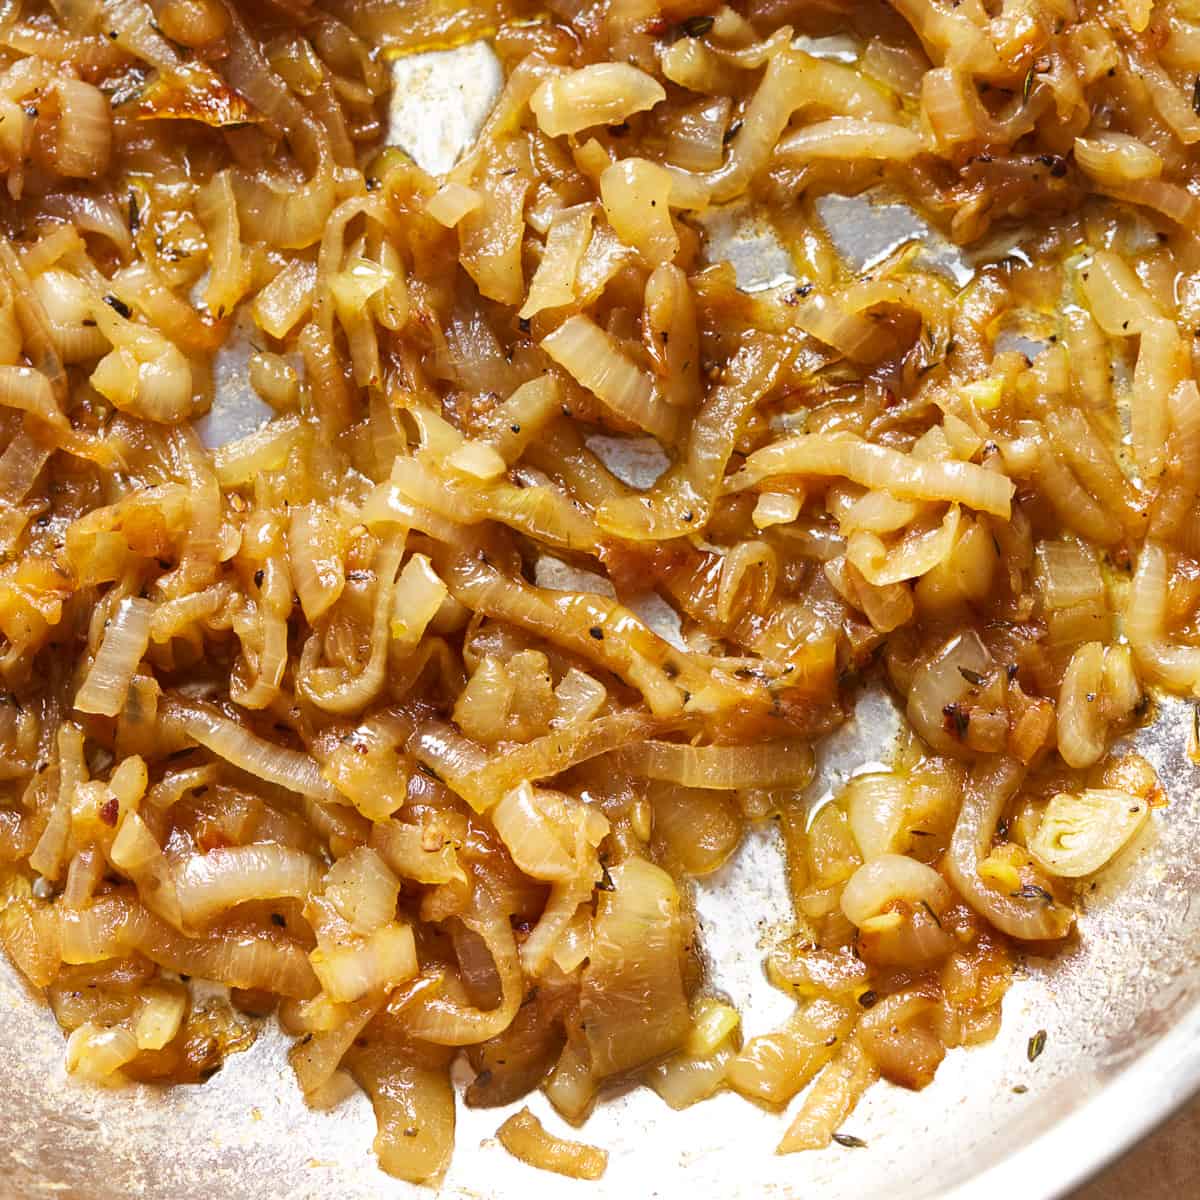 Caramelized onion recipes